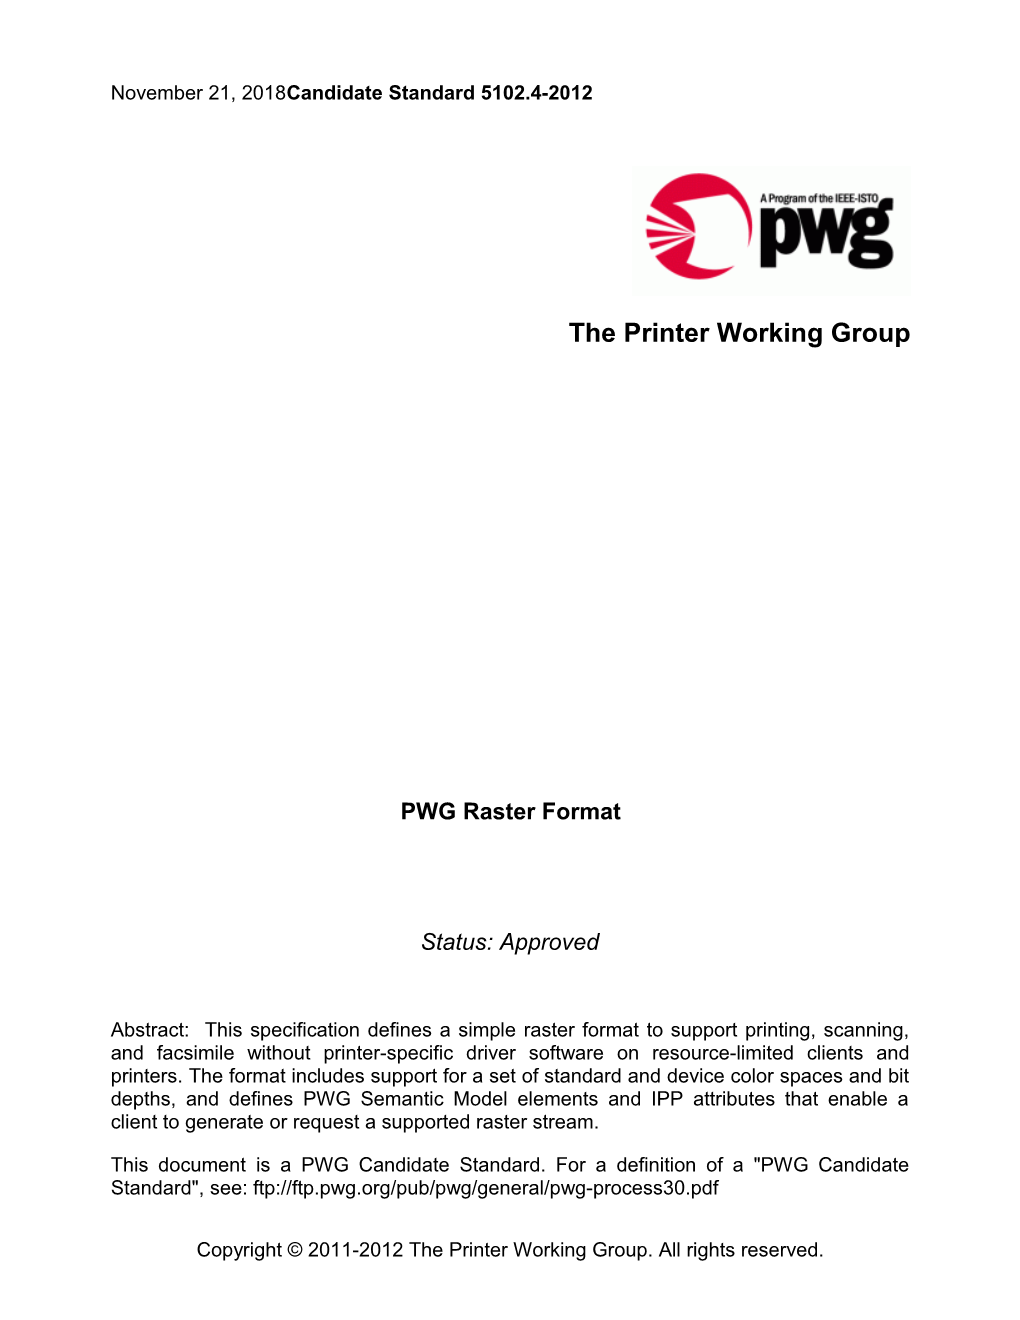 PWG Raster Format